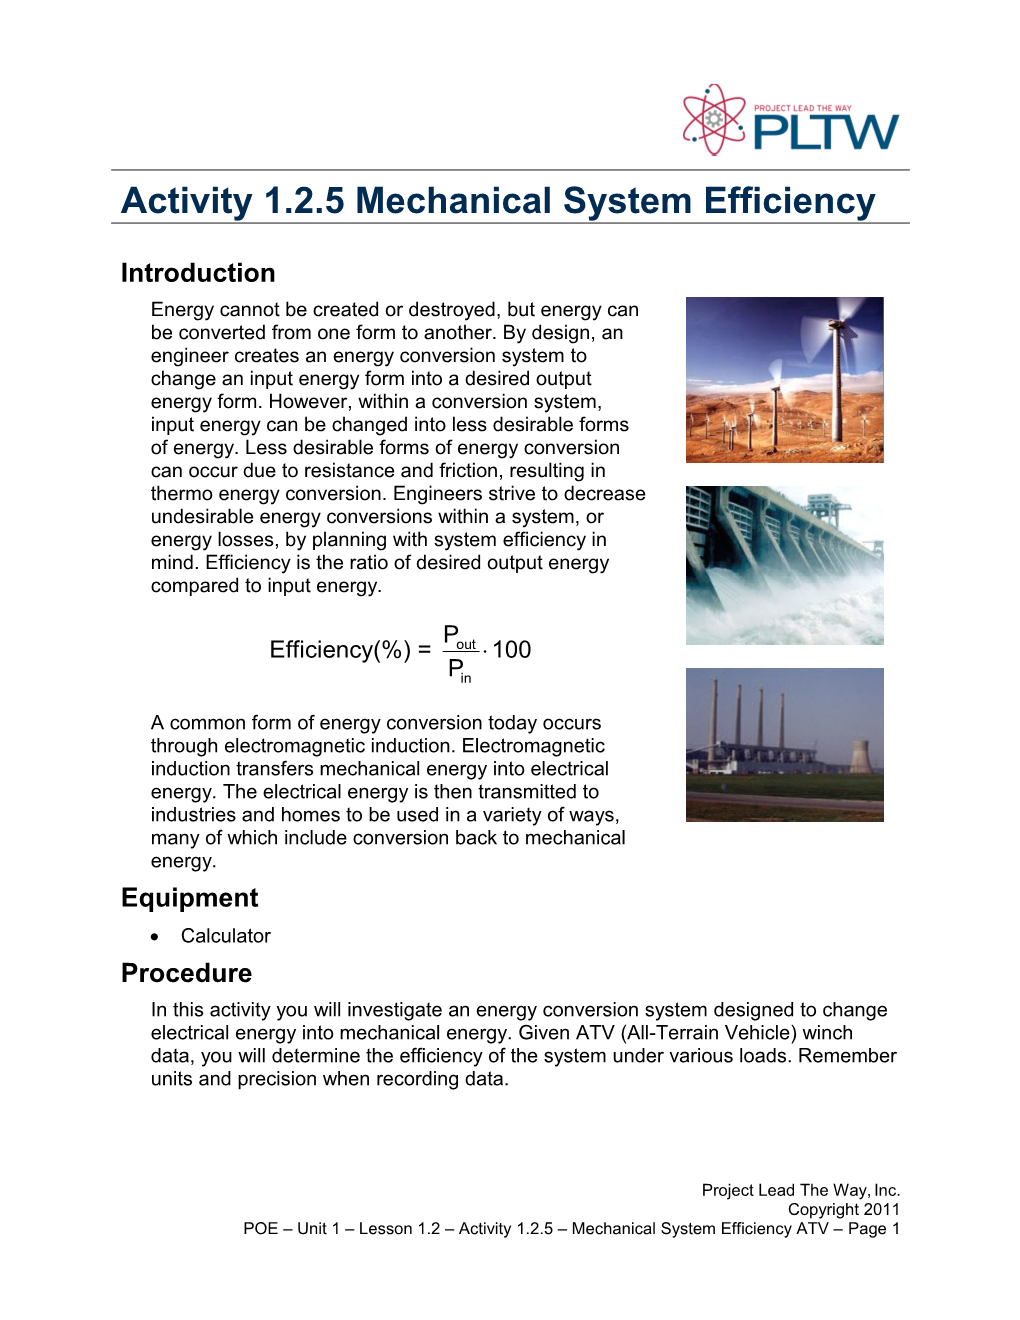 Activity 1.2.5 Mechanical System Efficiency ATV